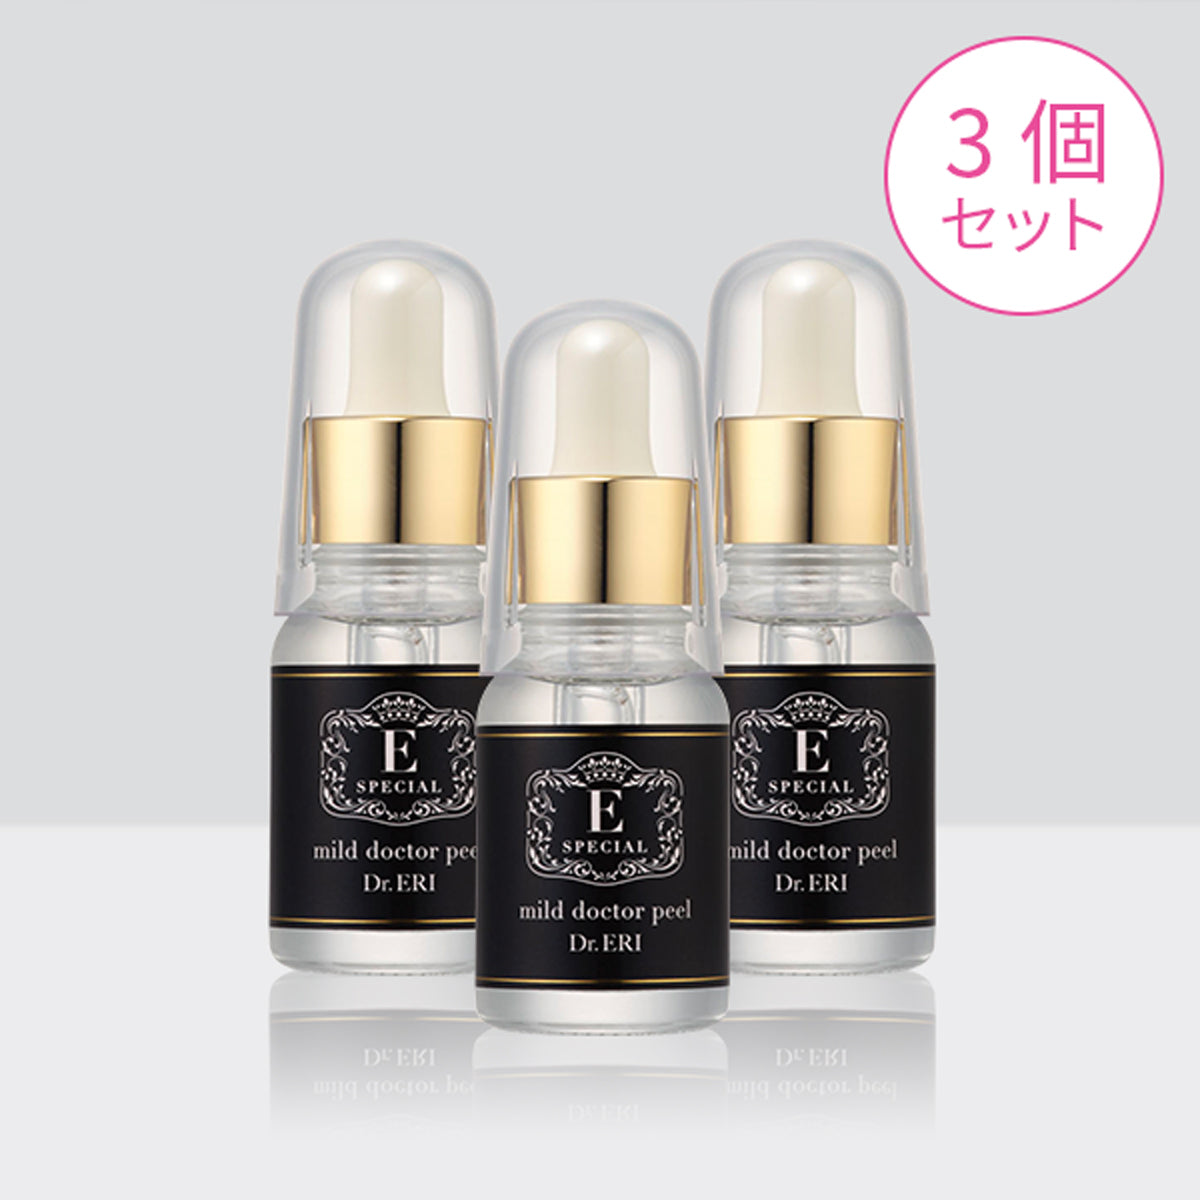 ［Bộ 3 sản phẩm］E-Special Skin Clear Serum <Mild Doctor Peel> [20mL]×3